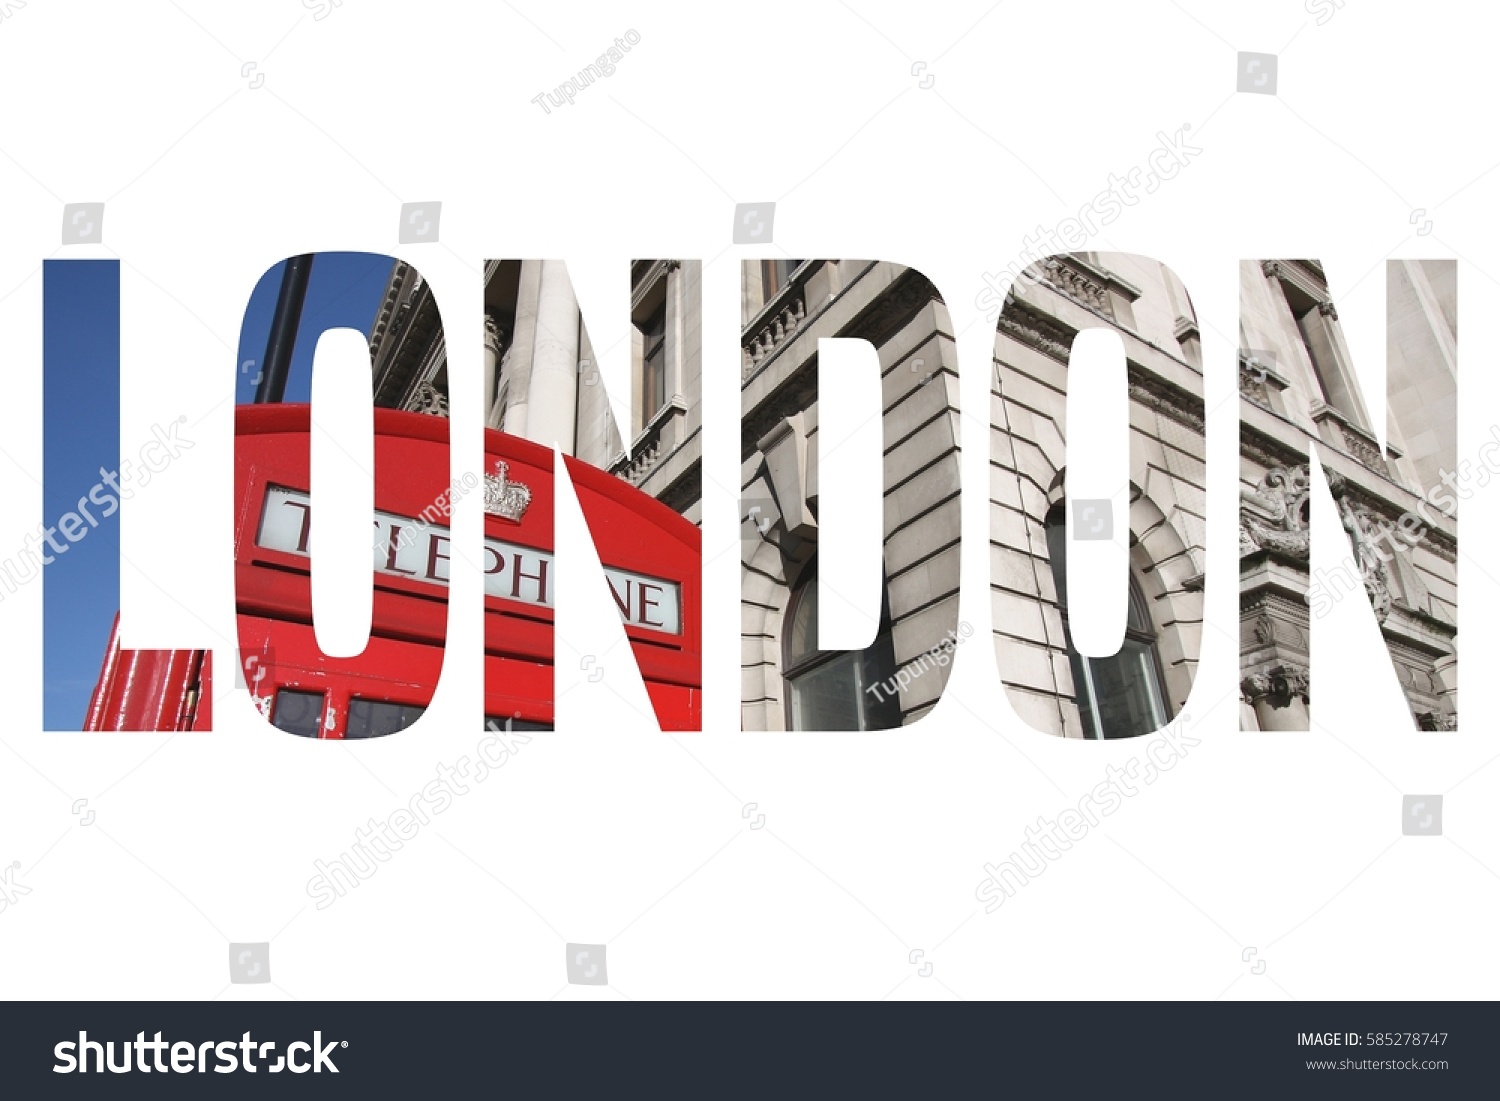 8,933 London name Images, Stock Photos & Vectors | Shutterstock